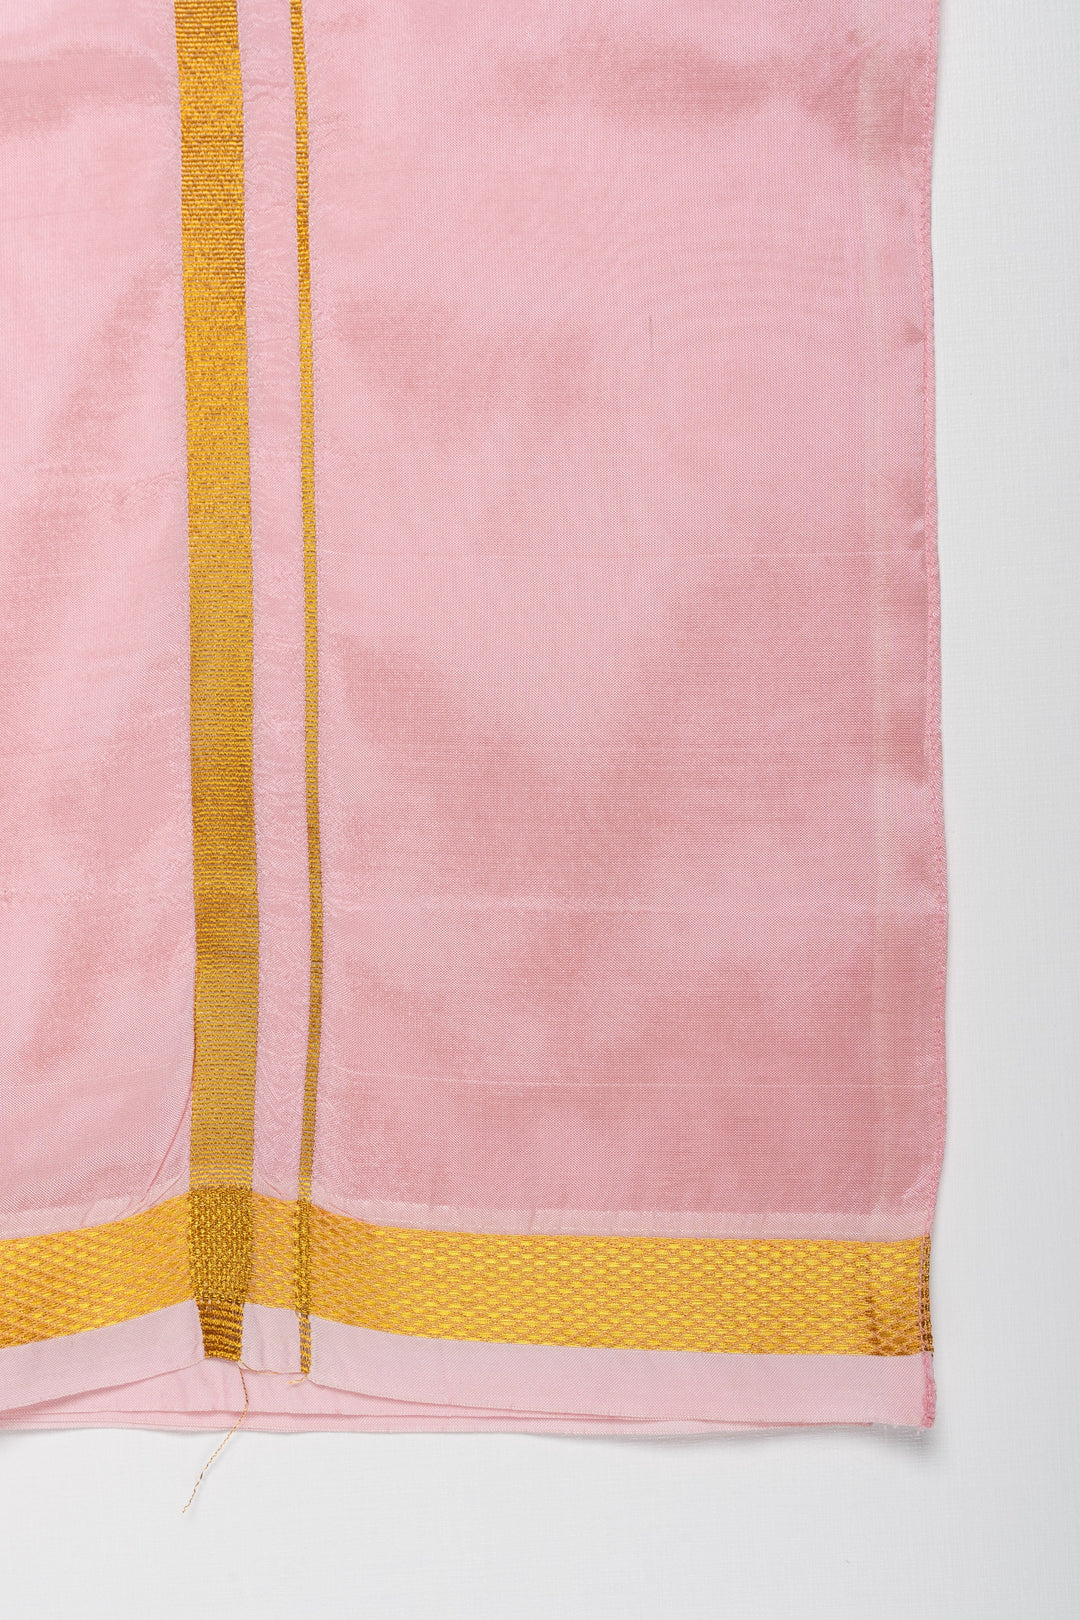 The Nesavu Boys Vesti Boys Elegant Silk Dhoti in Soft Pink with Golden Detailing Nesavu Shop Boys Pink Silk Dhoti with Golden Stripes | Traditional Festive Wear | The Nesavu